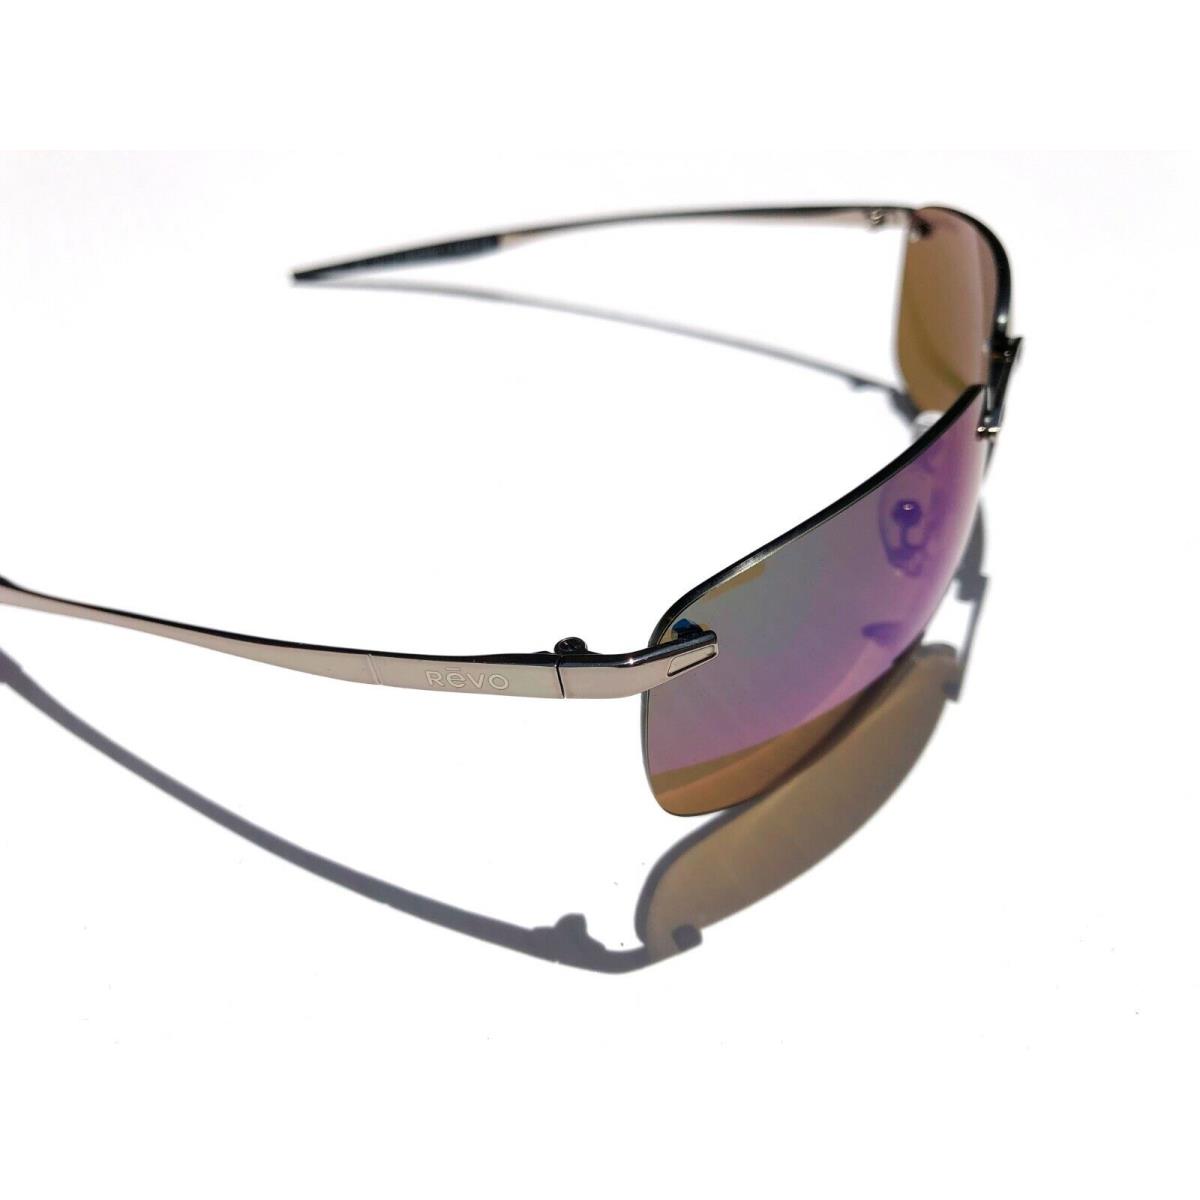 Revo sunglasses Descend - Clear Frame, Green Lens